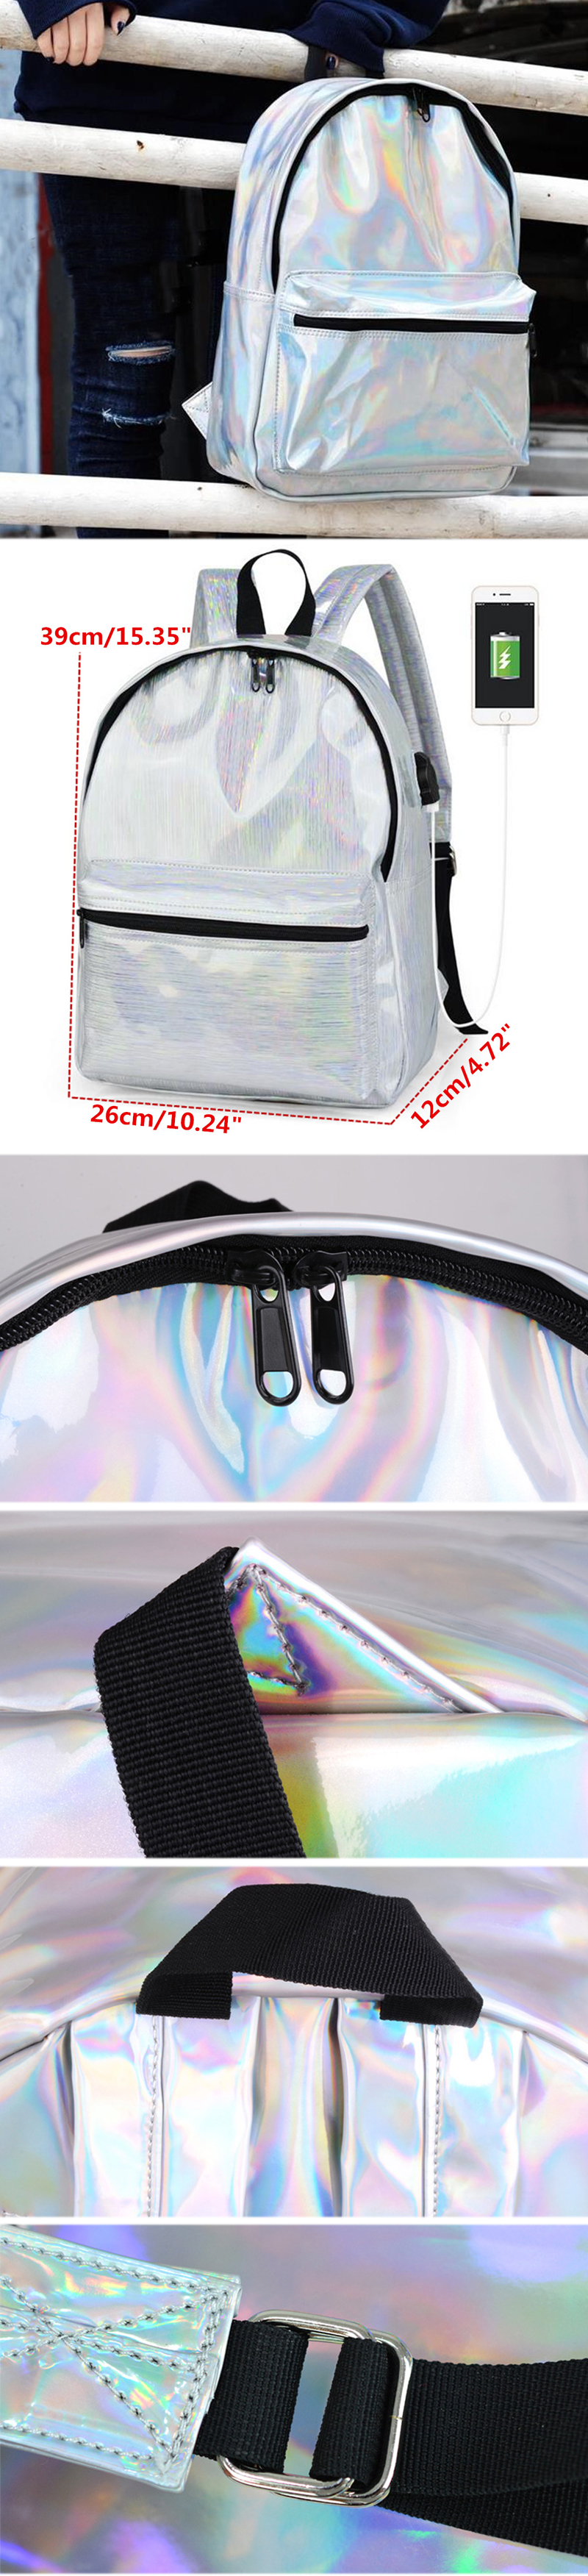 USB-PU-Backpack-Waterproof-14-Inch-Laptop-School-Bag-Camping-Travel-Pack-Shoulder-Bag-Handbag-1356669-1